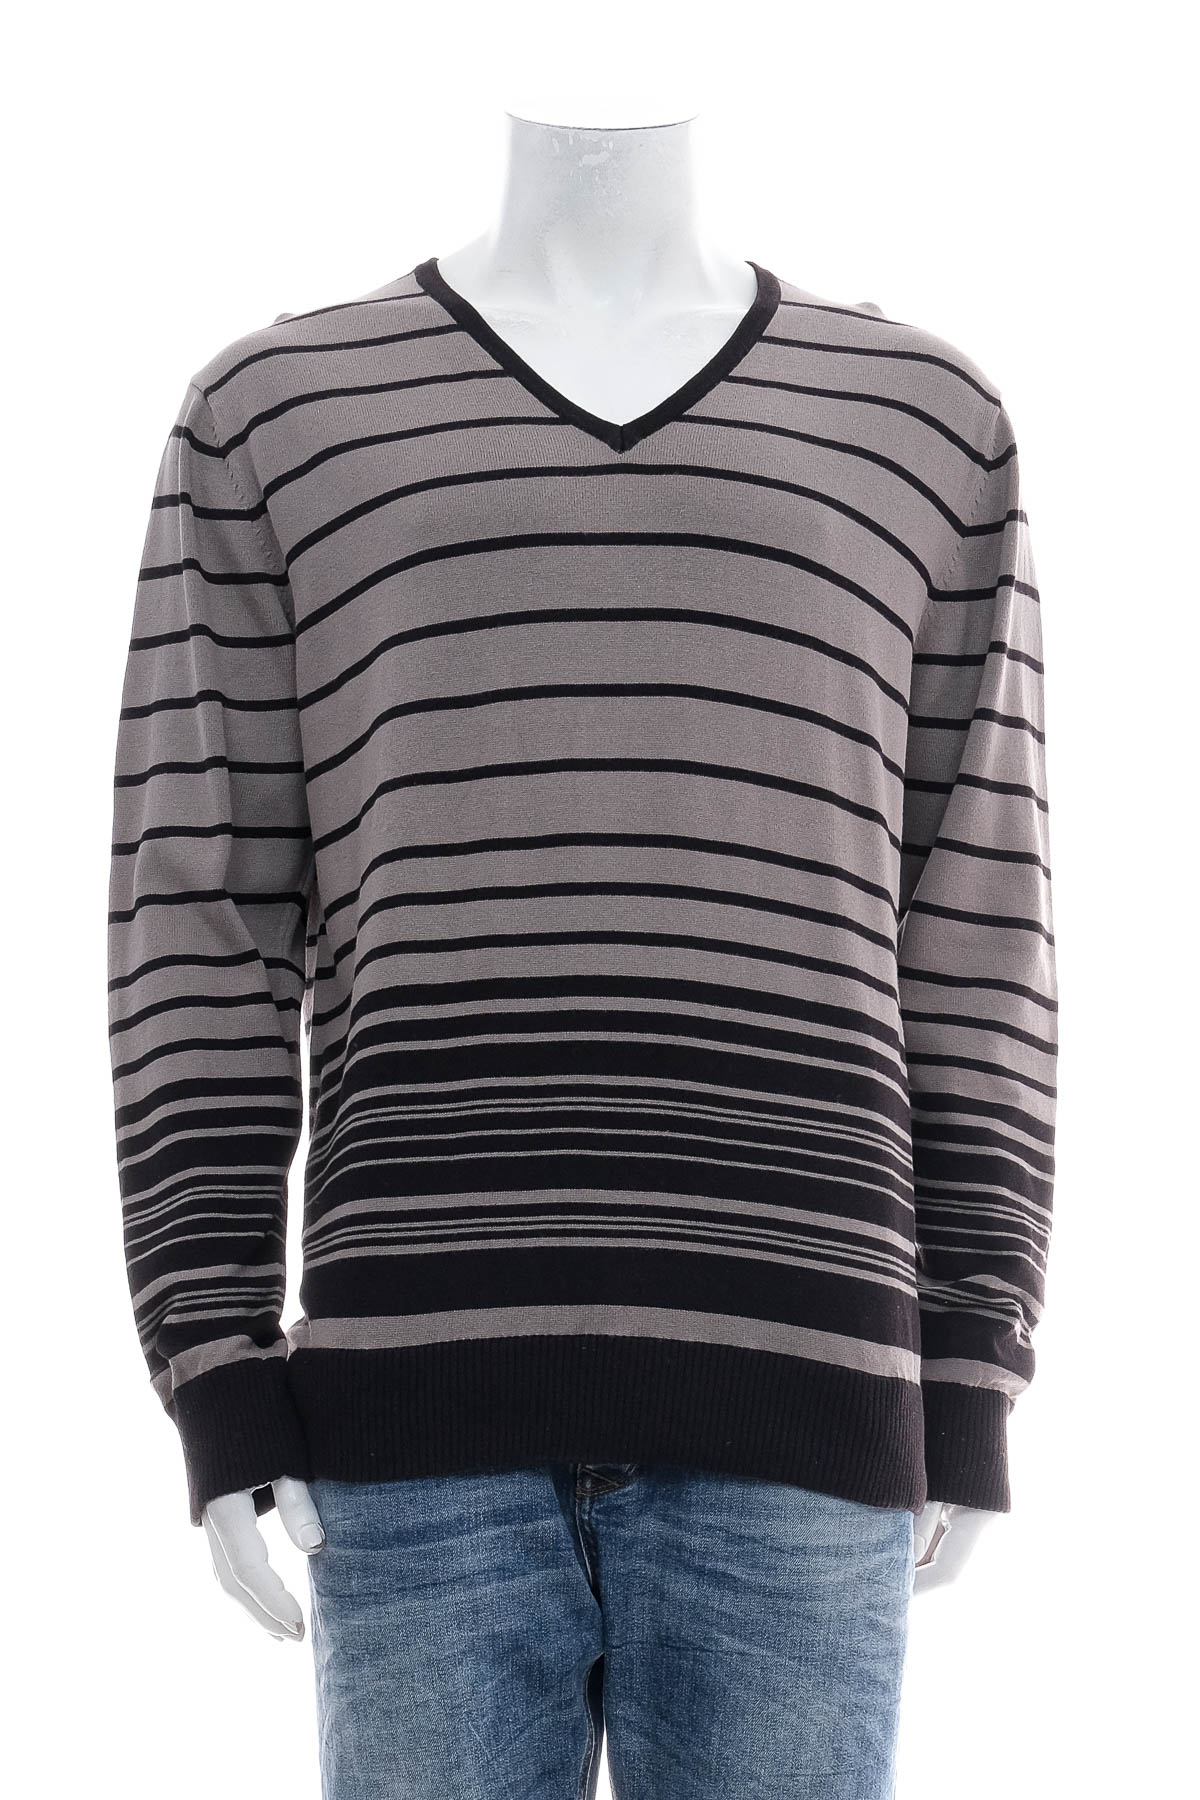 Men's sweater - Kenji - 0